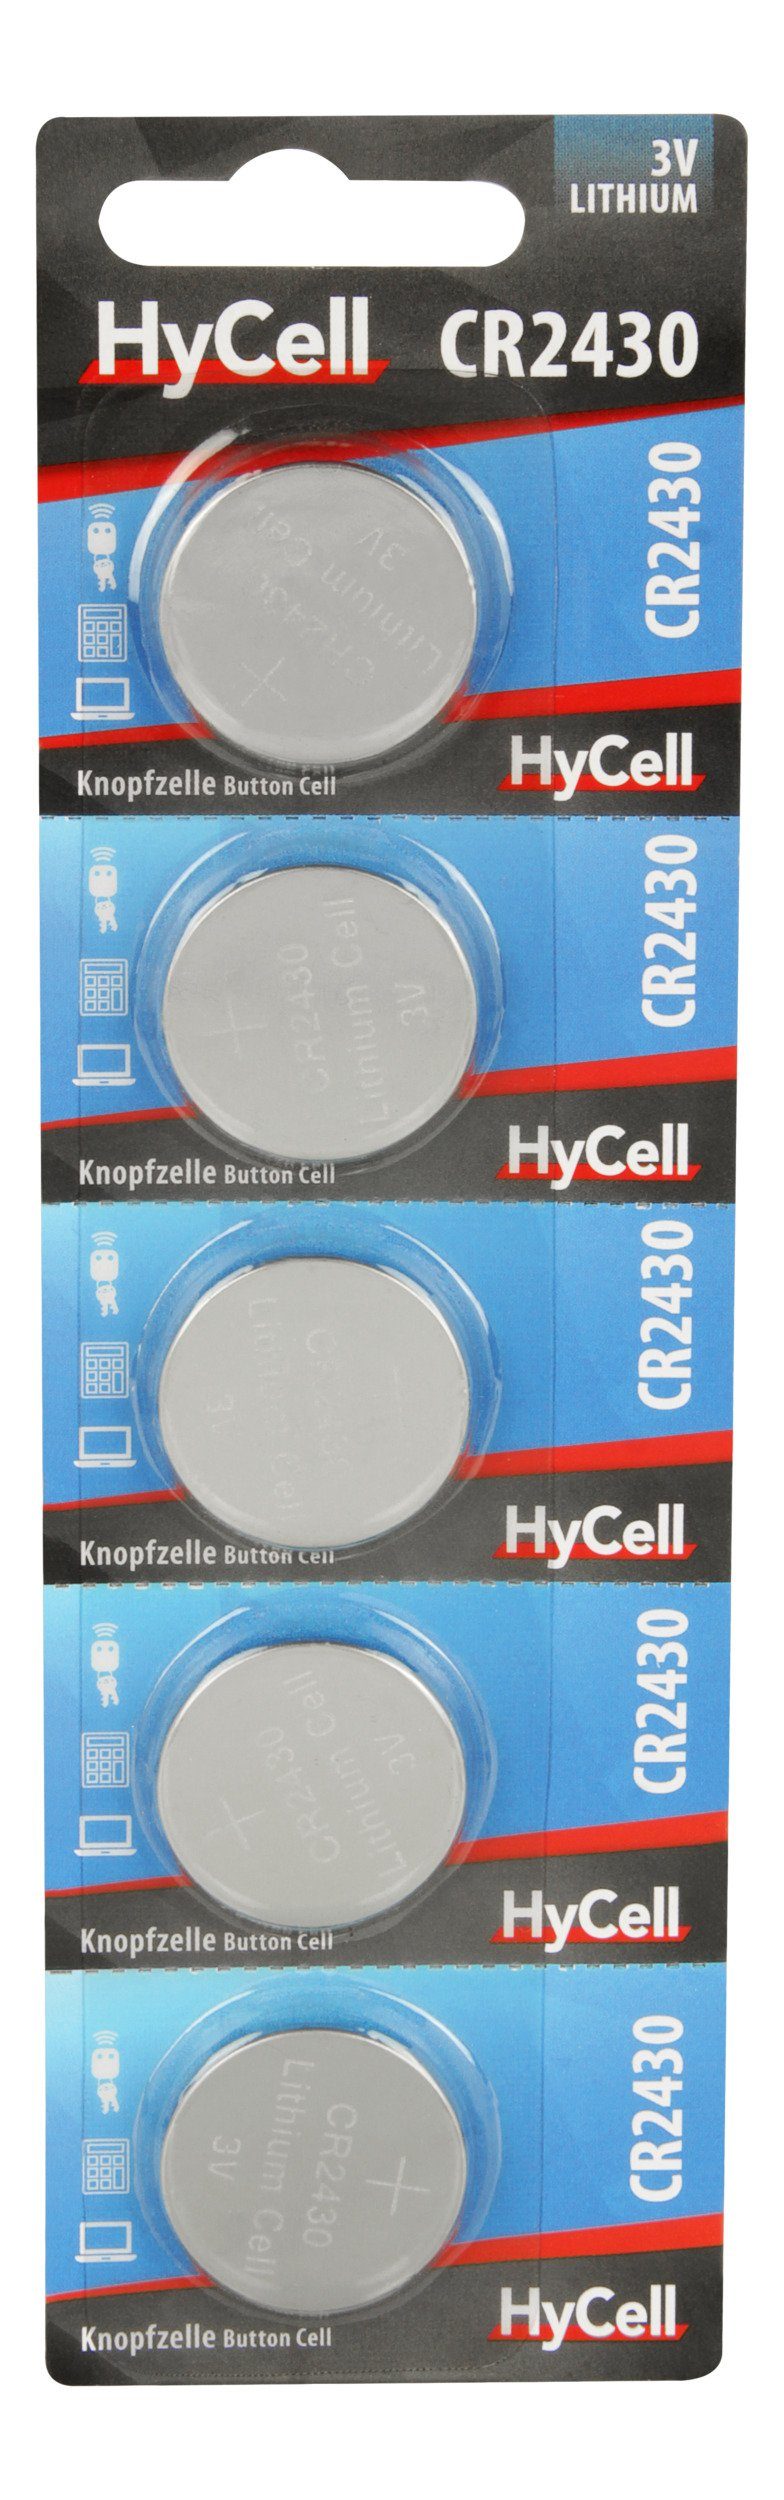 HyCell 5er Pack Lithium Knopfzellen CR2430 3V - Knopfbatterien - 5 Stück Knopfzelle